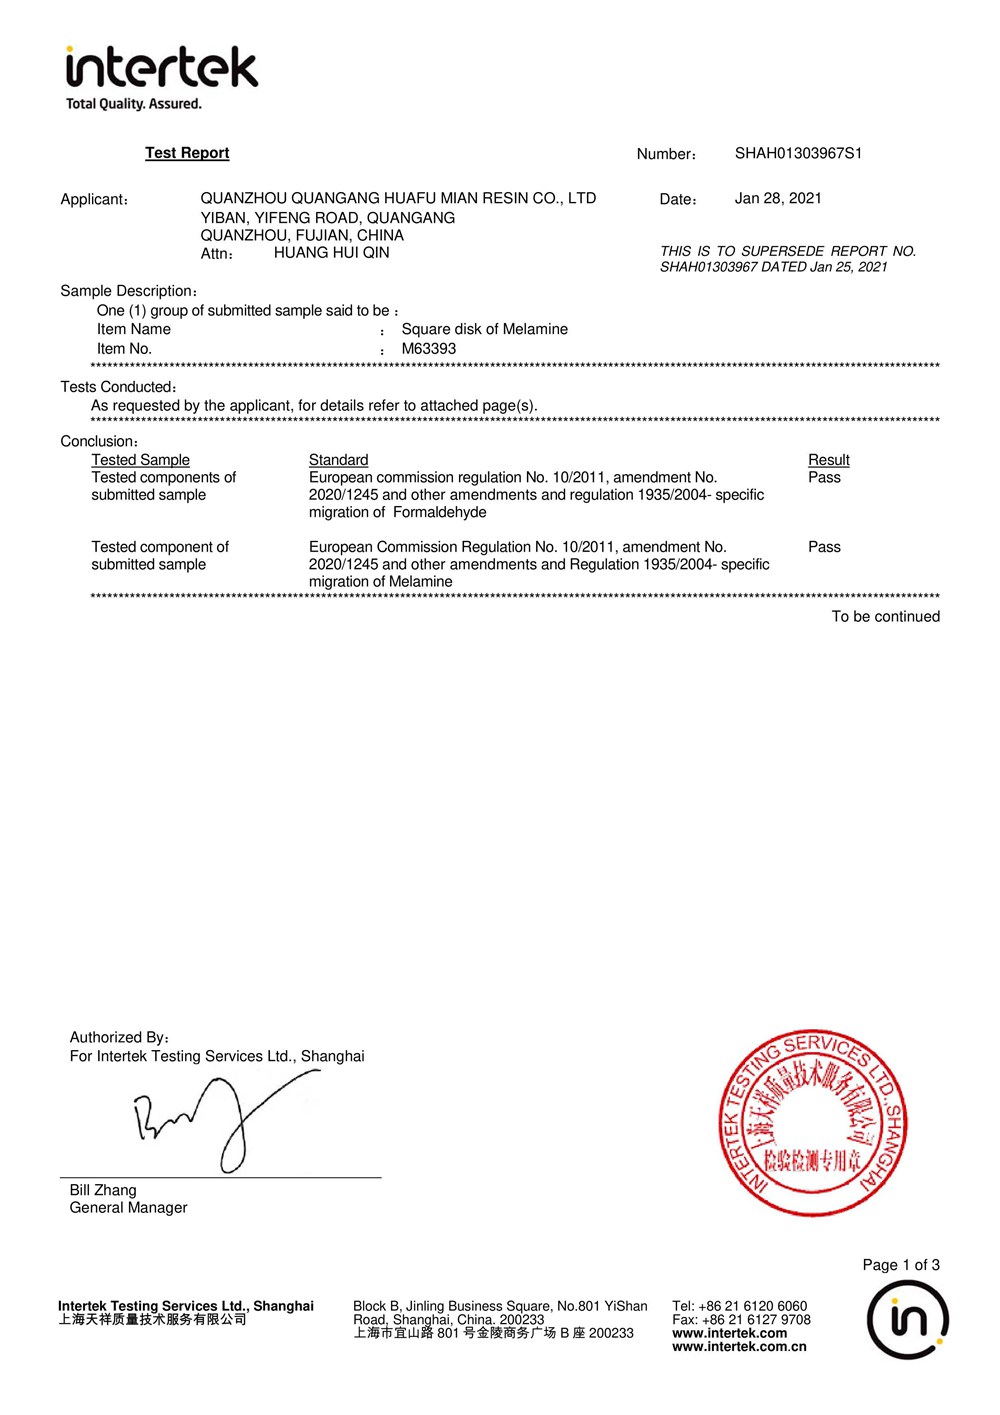 Huafu Chemicals:Certificado Intertek em 2021
        